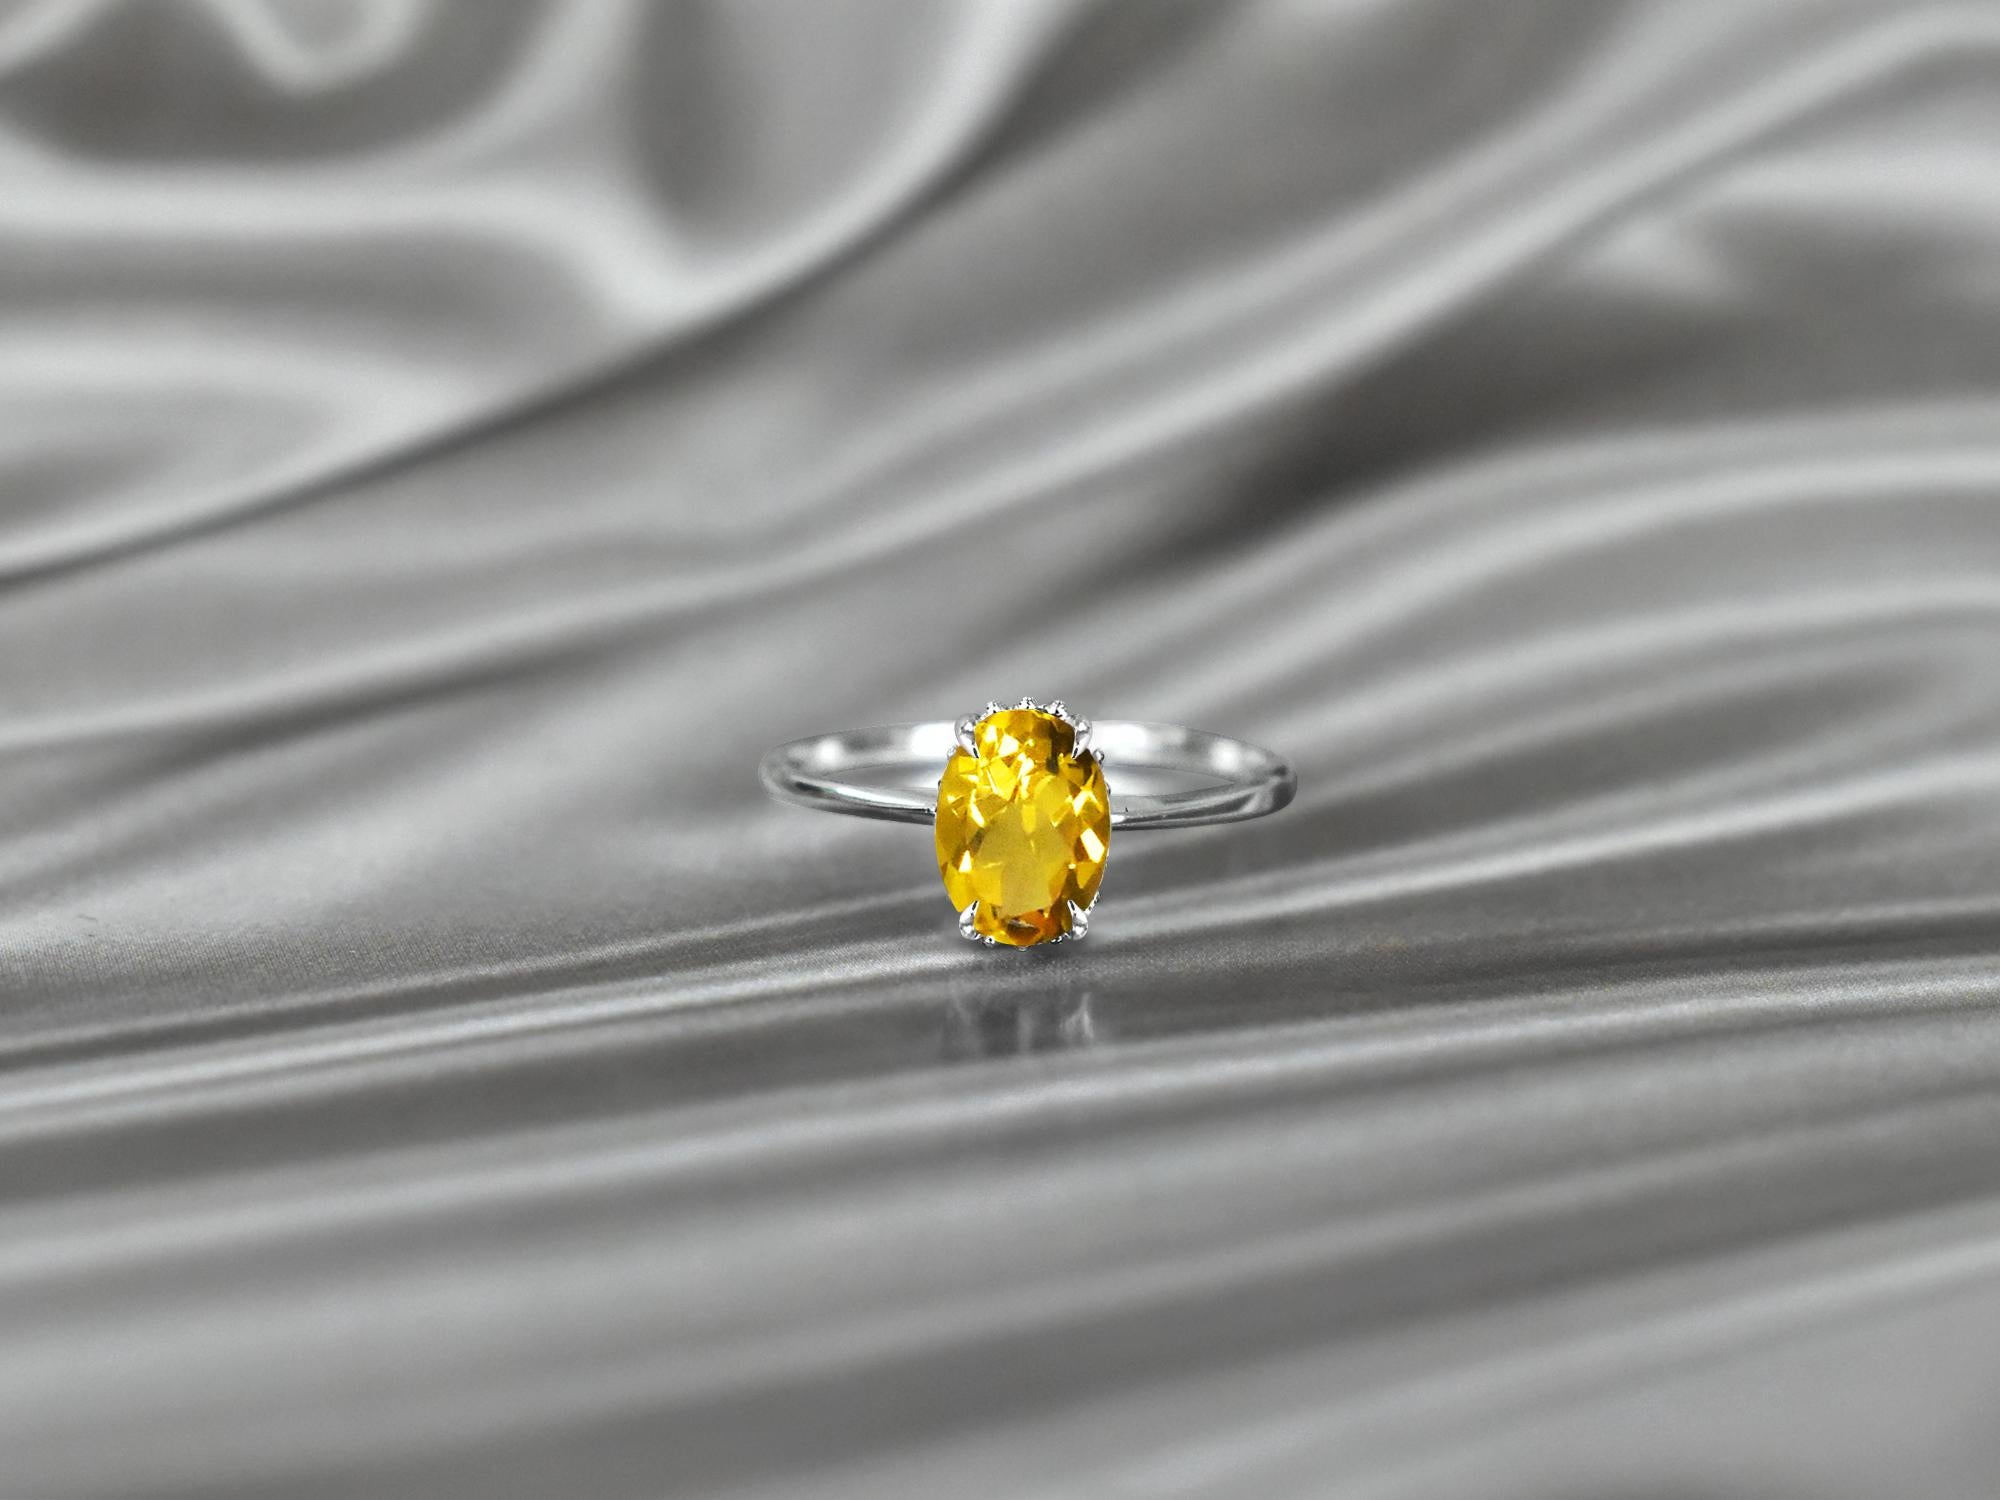 For Sale:  14k Gold Oval Gemstone 8x6 mm Oval Cut Gemstone Ring Gemstone Engagement Ring 6